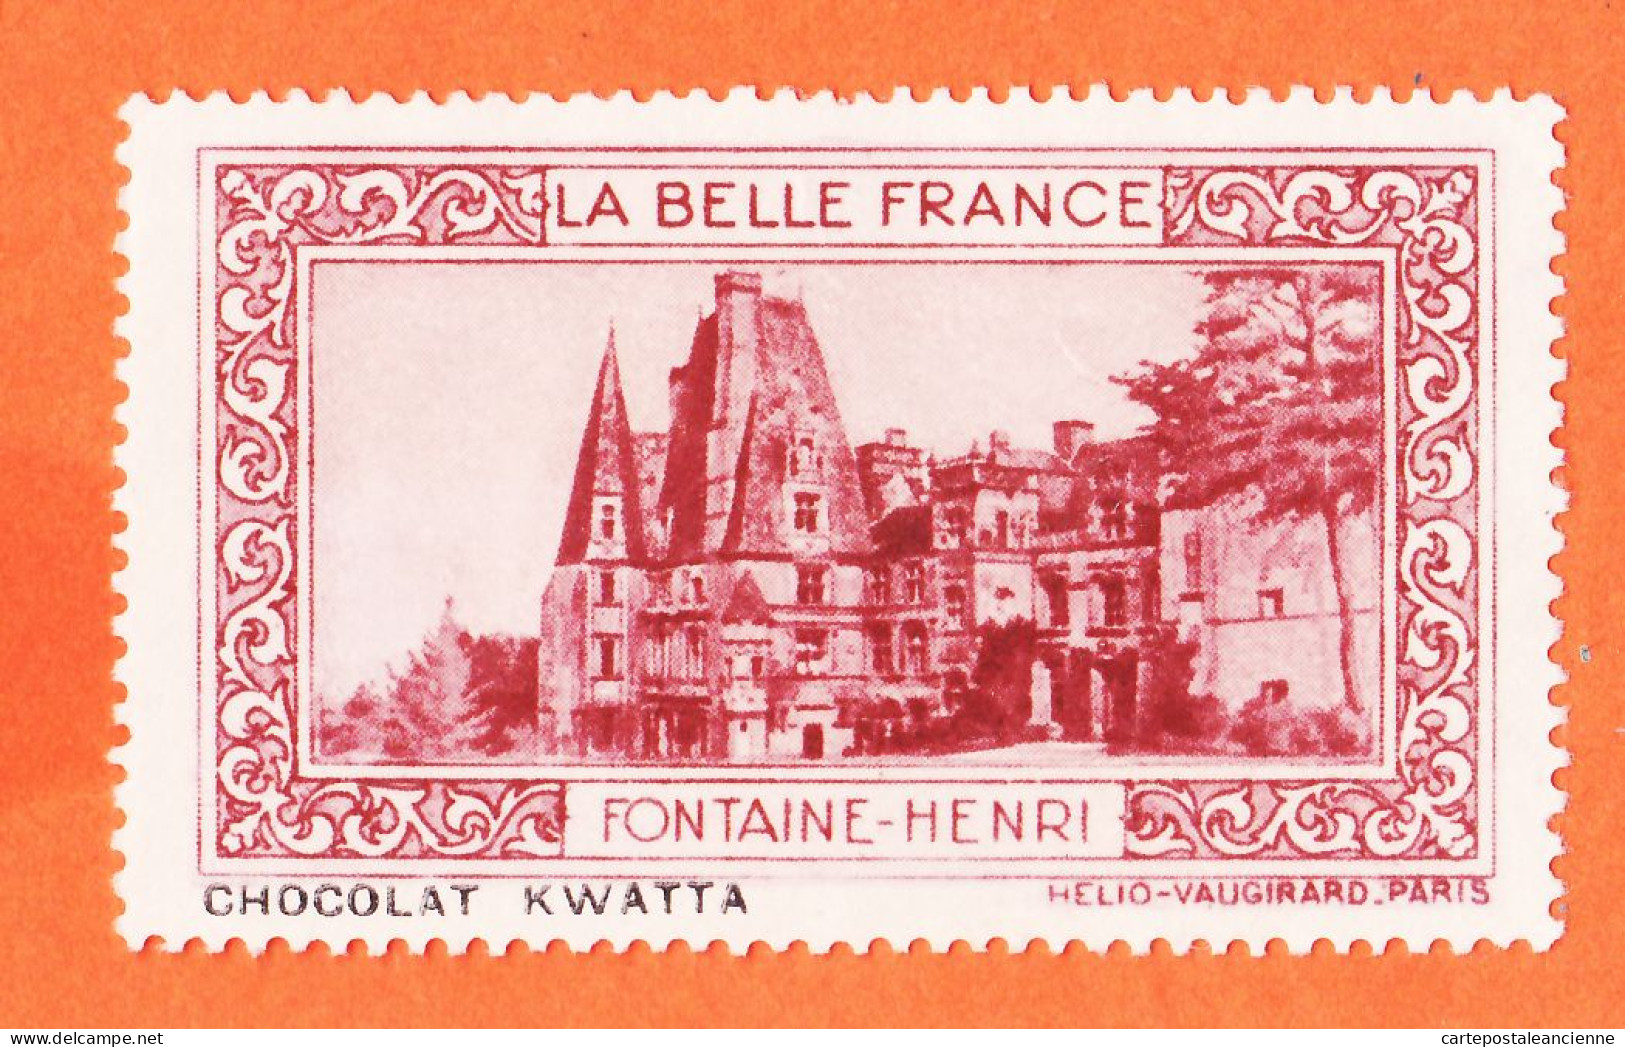 31045 / FONTAINE-HENRI 14-Calvados Pub Chocolat KWATTA Vignette Collection BELLE FRANCE HELIO-VAUGIRARD Erinnophilie - Tourism (Labels)